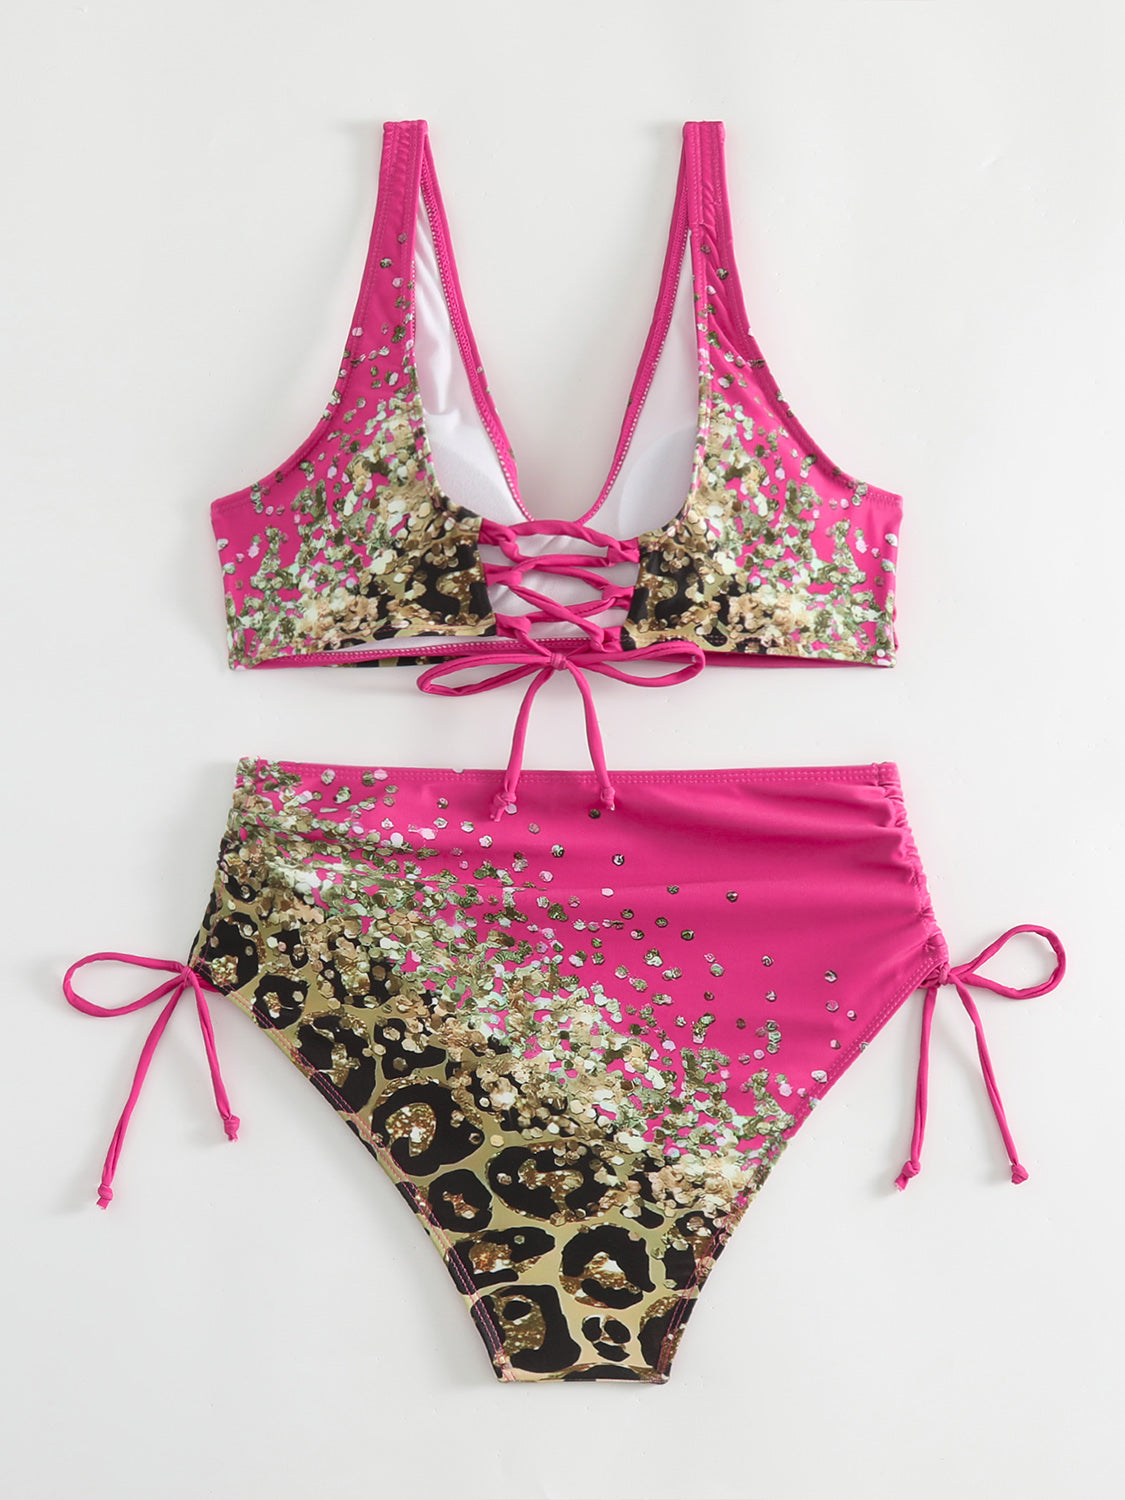 TEEK - Lace-Up Printed Wide Strap Bikini SWIMWEAR TEEK Trend Hot Pink S 